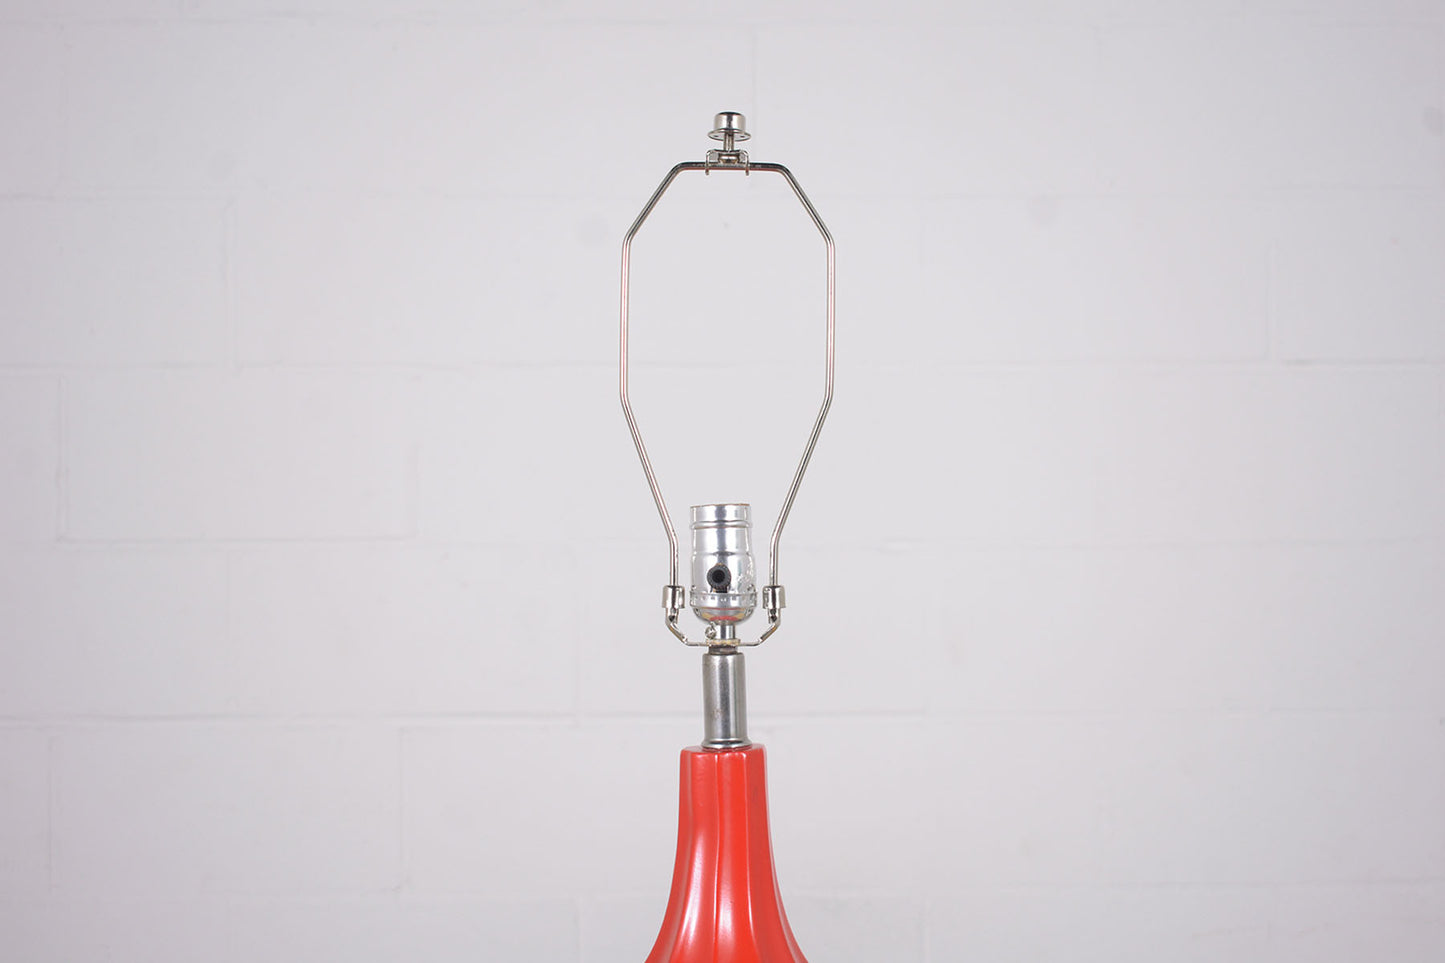 Pair of 1960s Sleek Sphere-Shaped Red Ceramic Mid-Century Modern Table Lamps